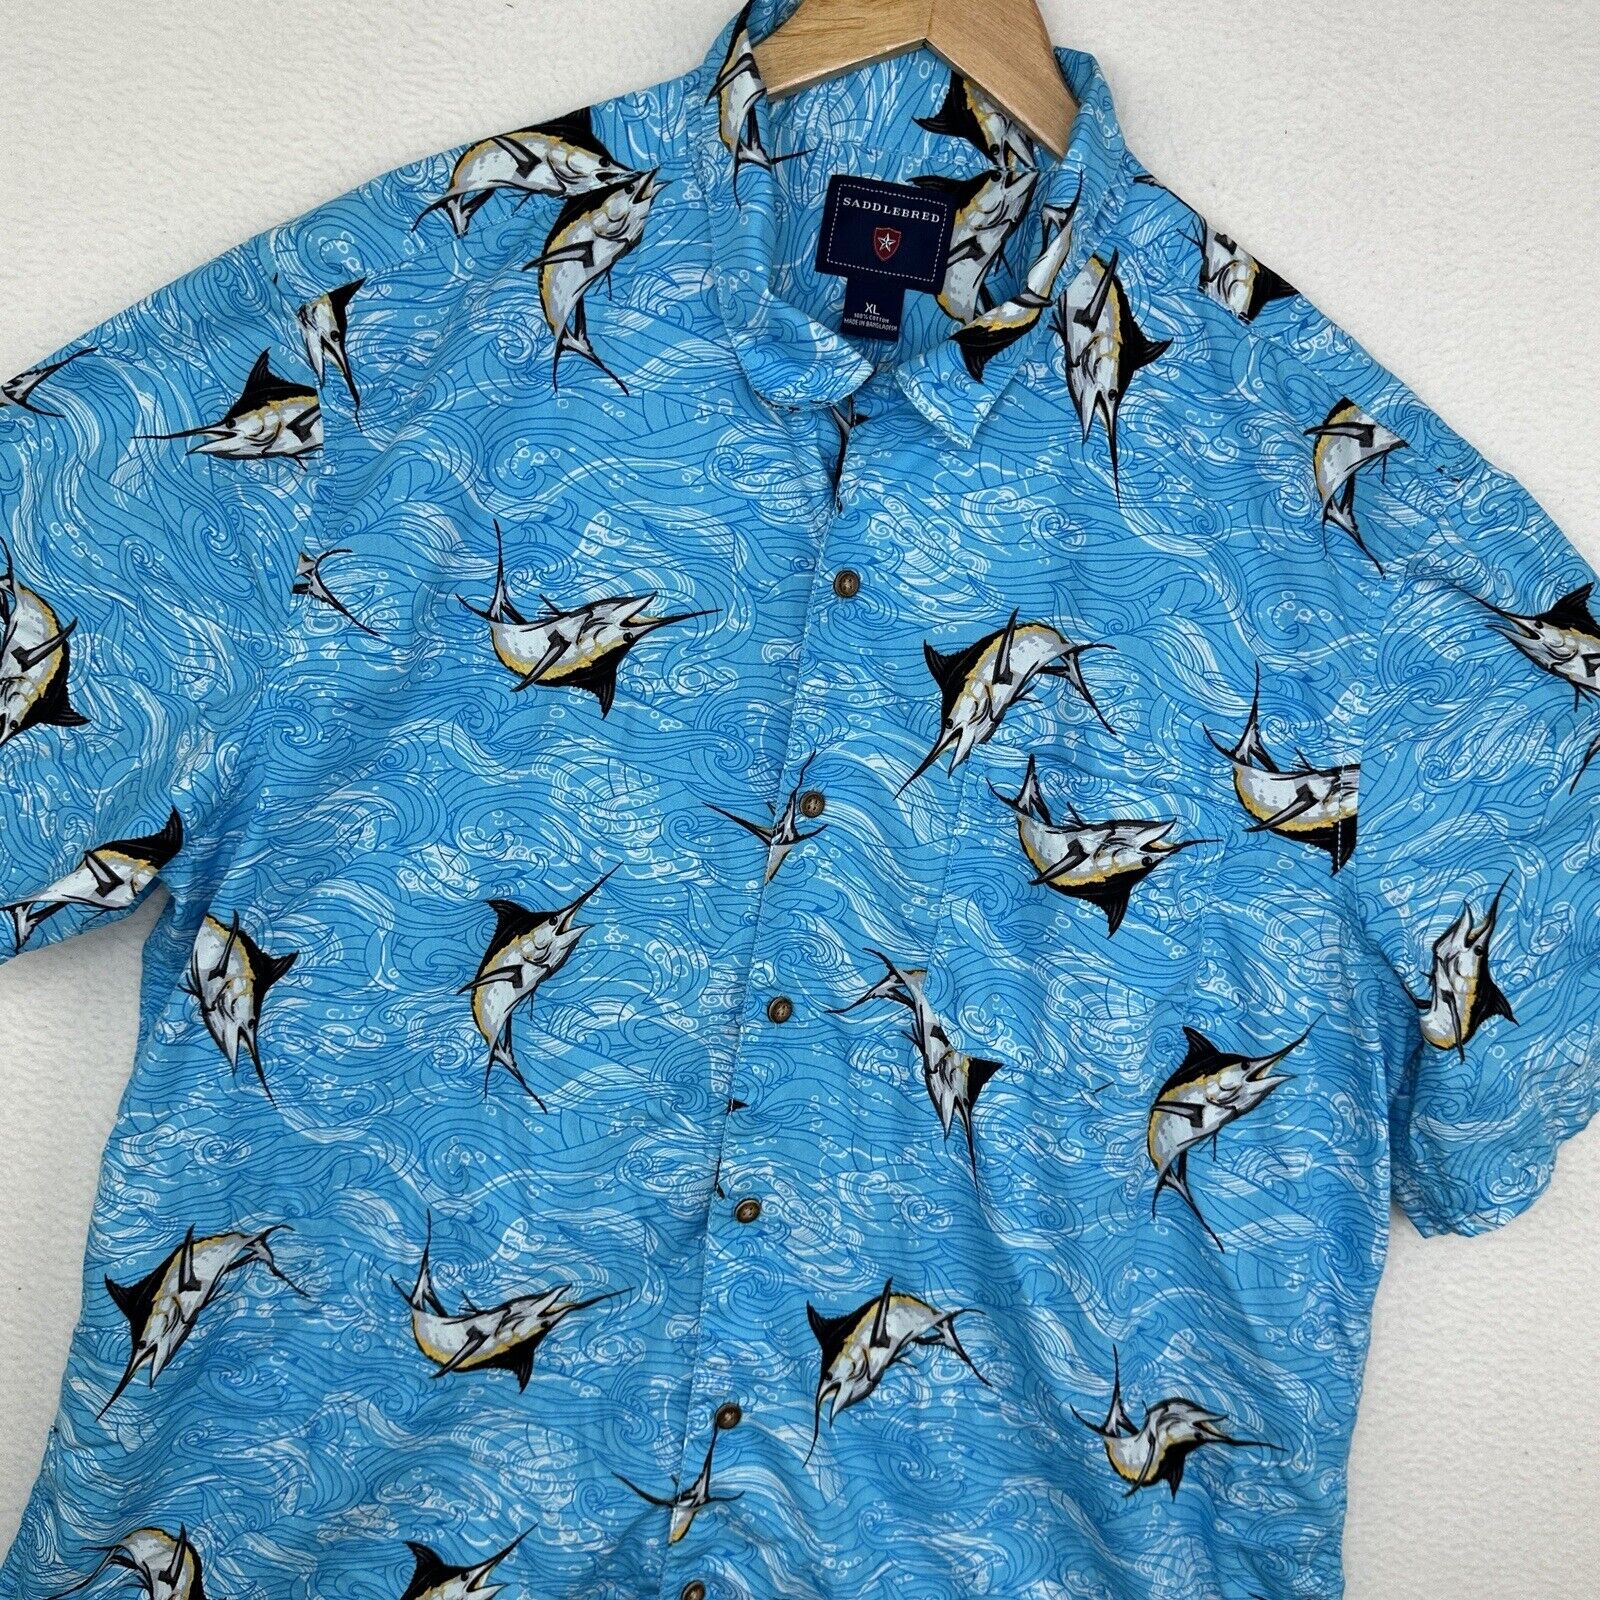 Saddlebred Mens XL Short Sleeve Button Up Shirt Marlin Fish Hawaiian Blue Ocean